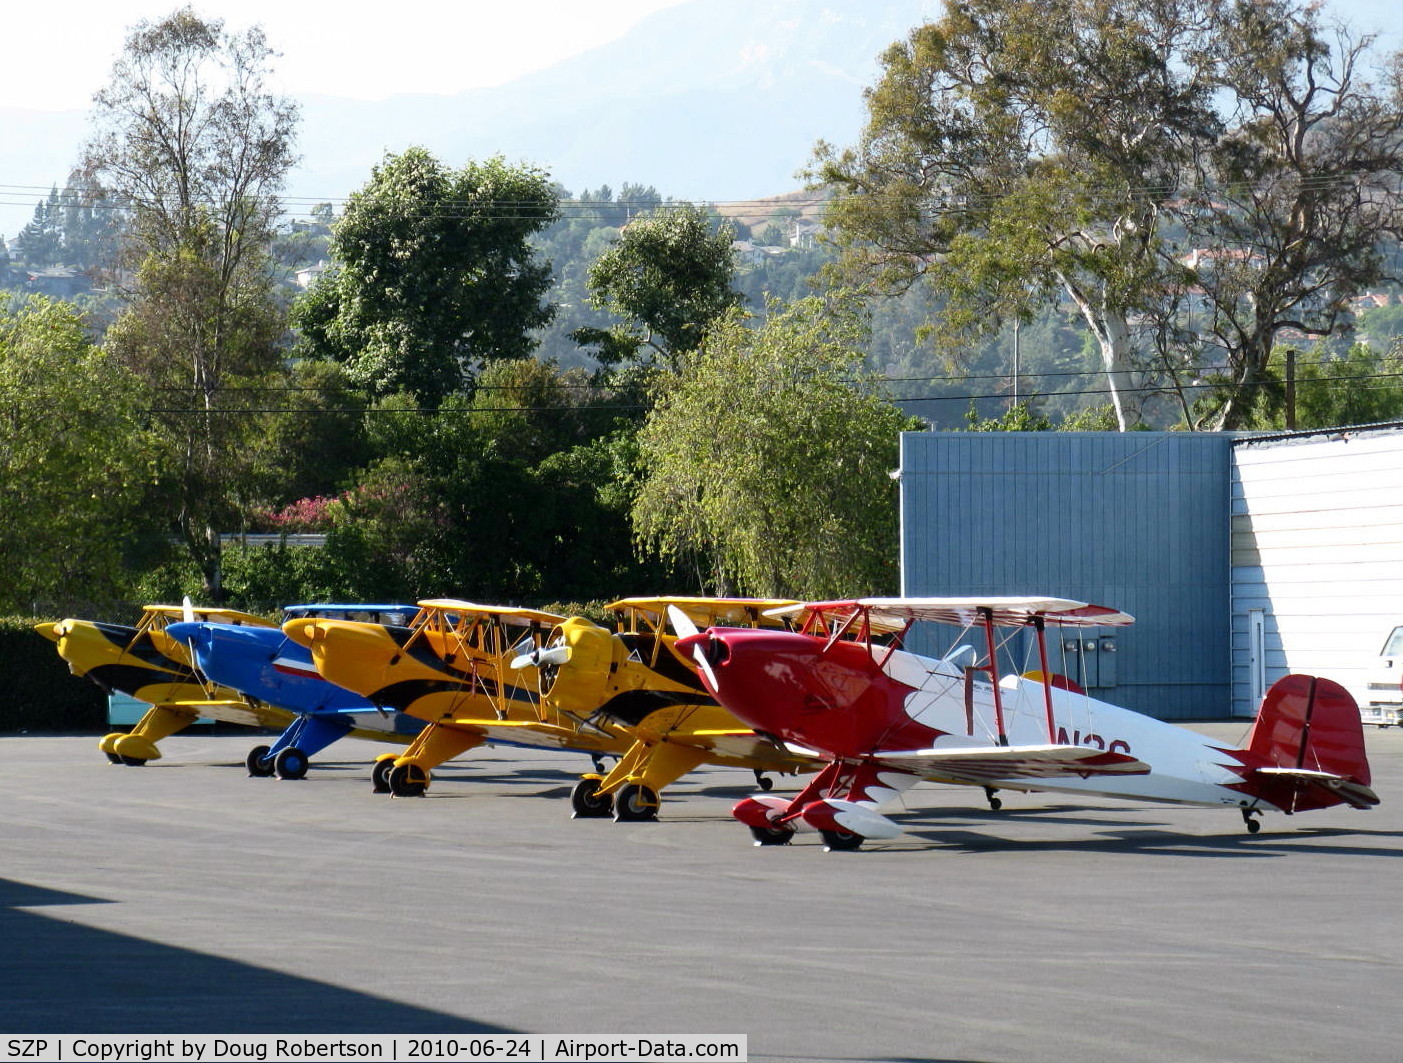 Santa Paula Airport (SZP) - Early Arrivals-National Bucker Fly-In